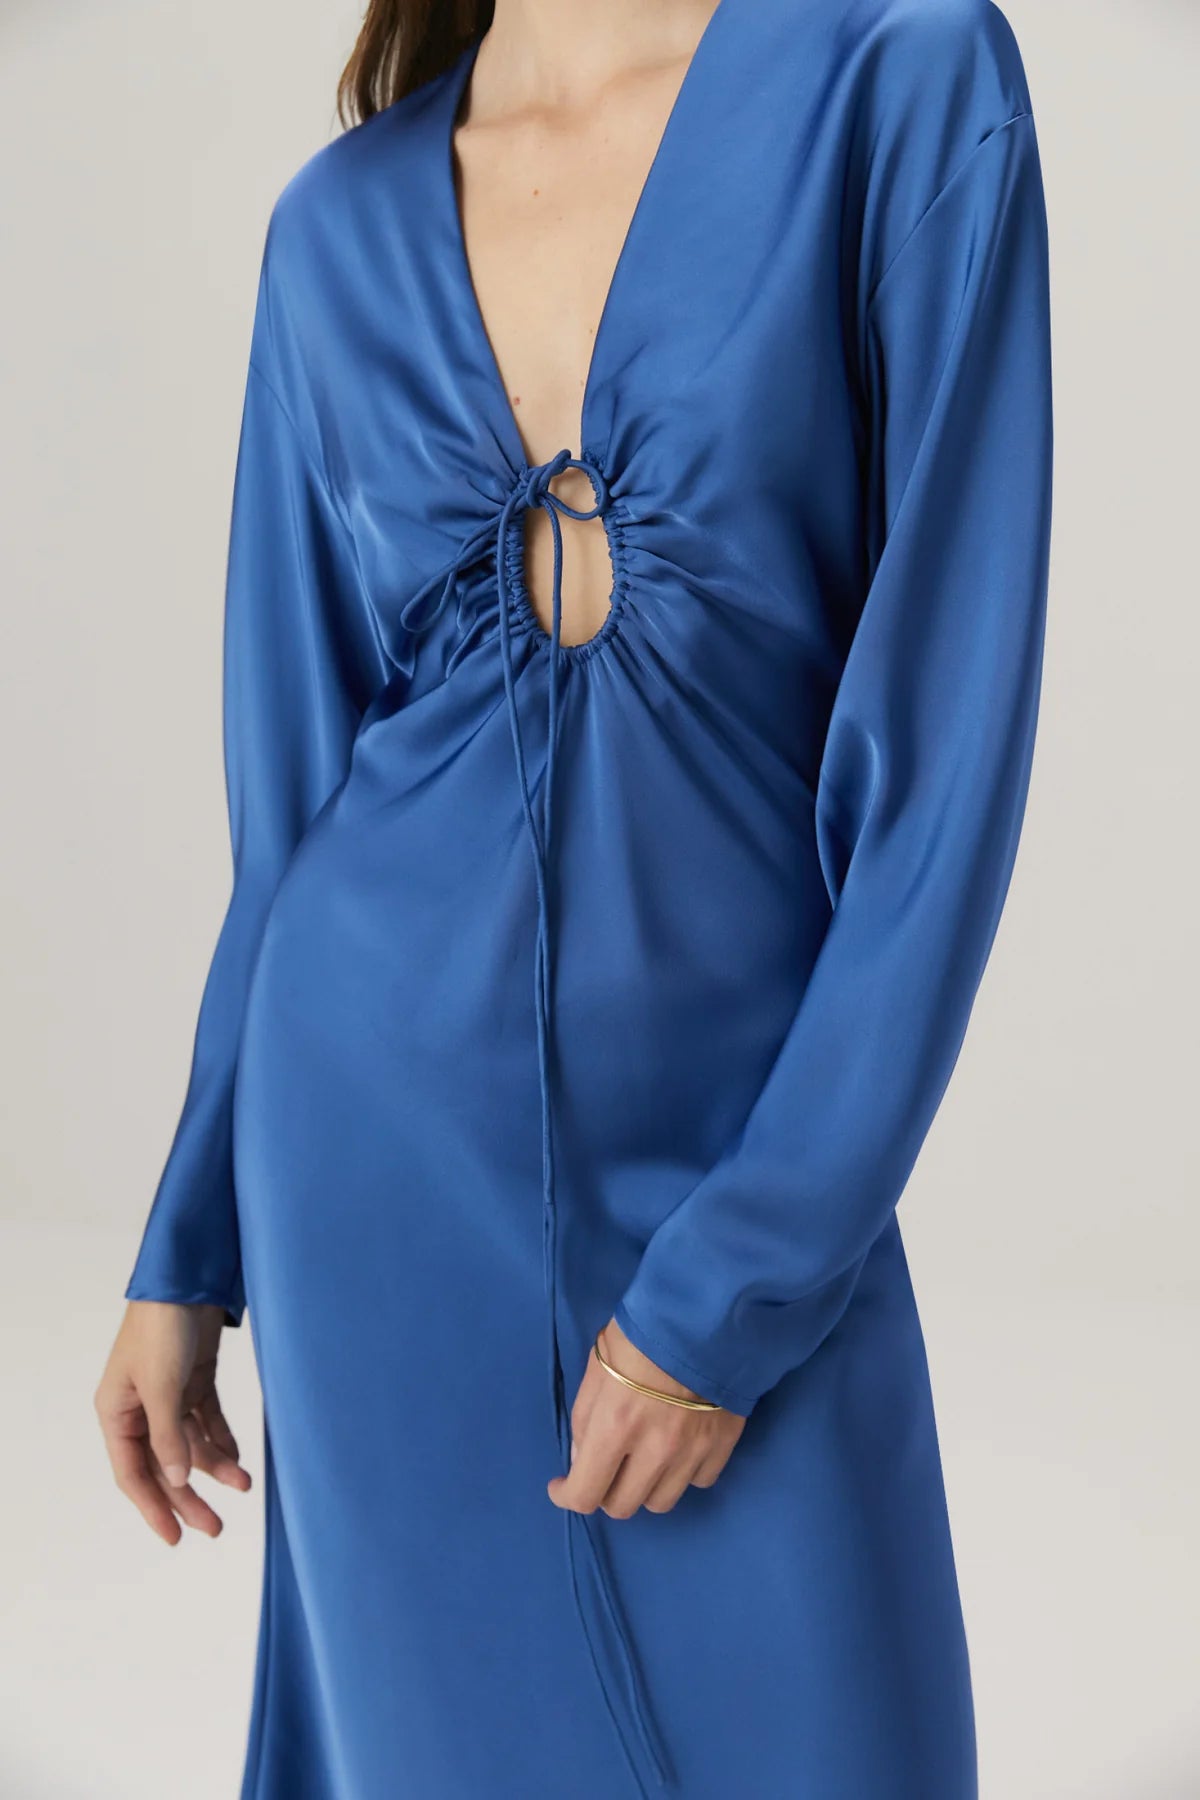 Seraphine Dress - Denim Blue